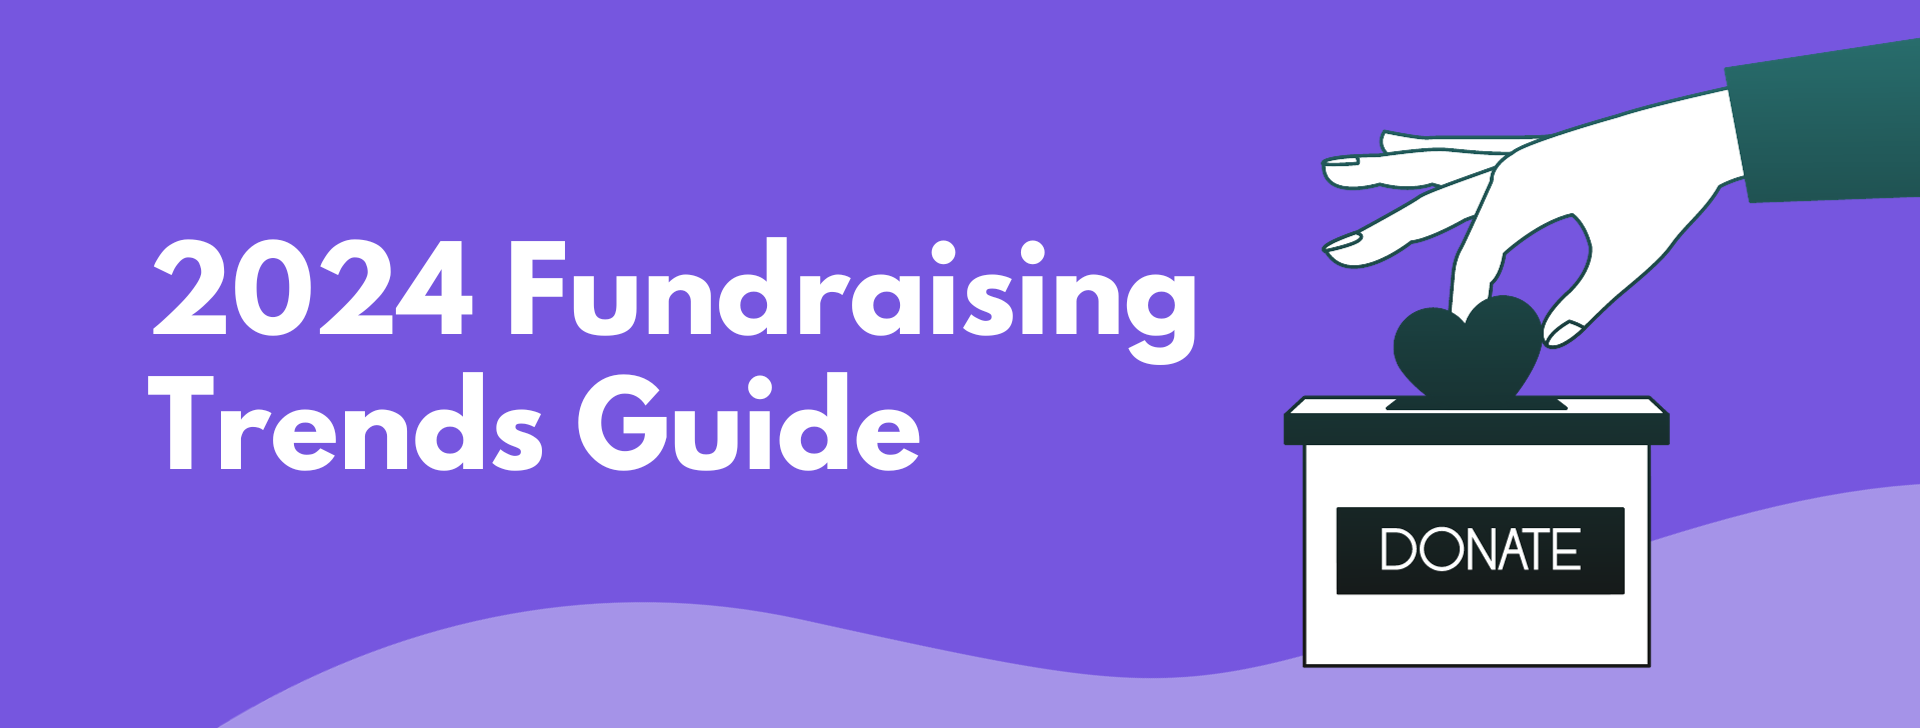 2024 Fundraising Trends Guide Keela